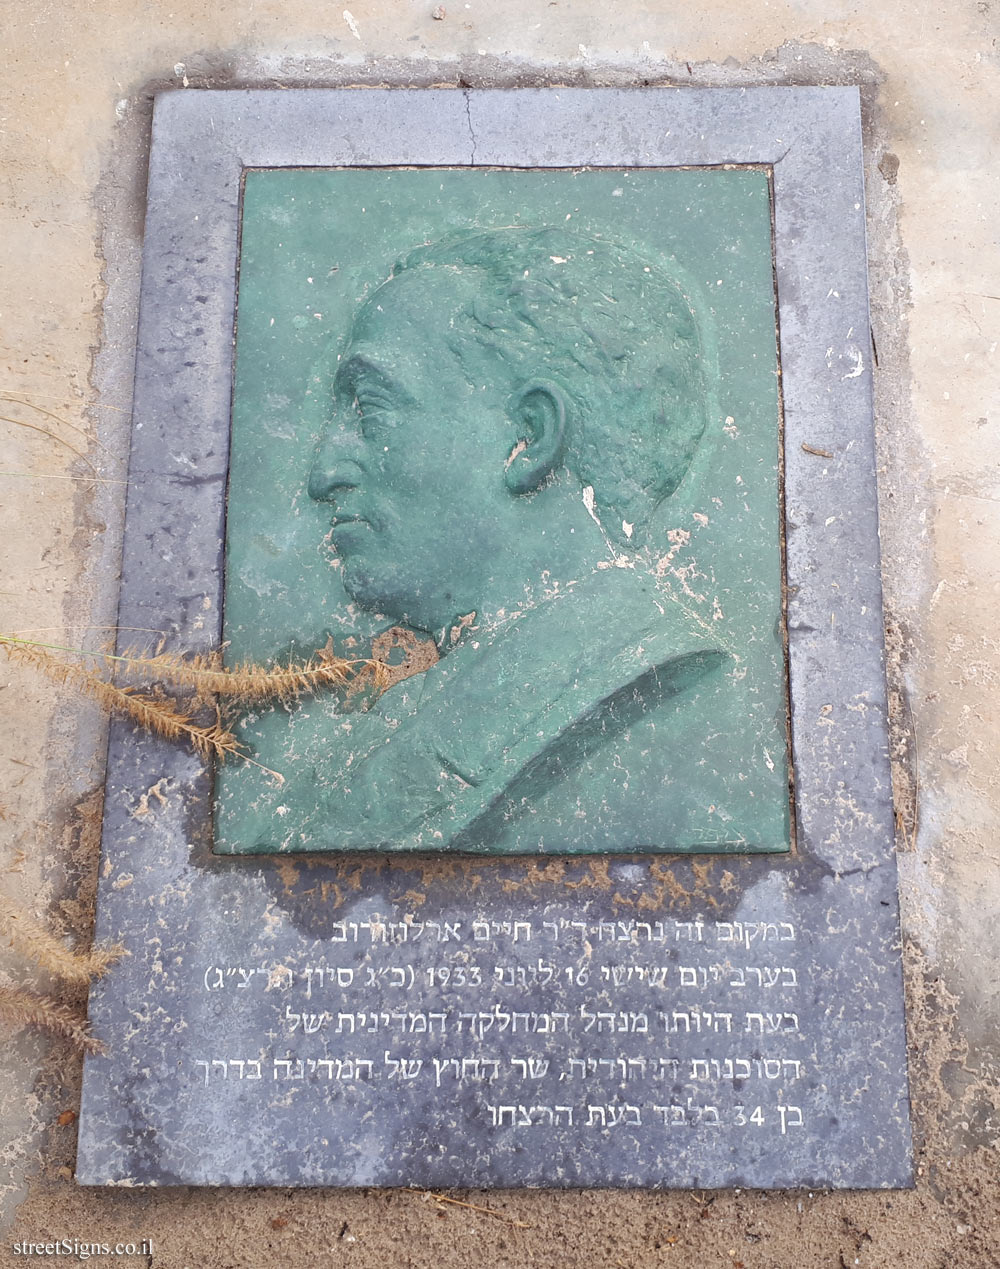 Tel Aviv - Memorial plaque where Haim Arlozorov was murdered